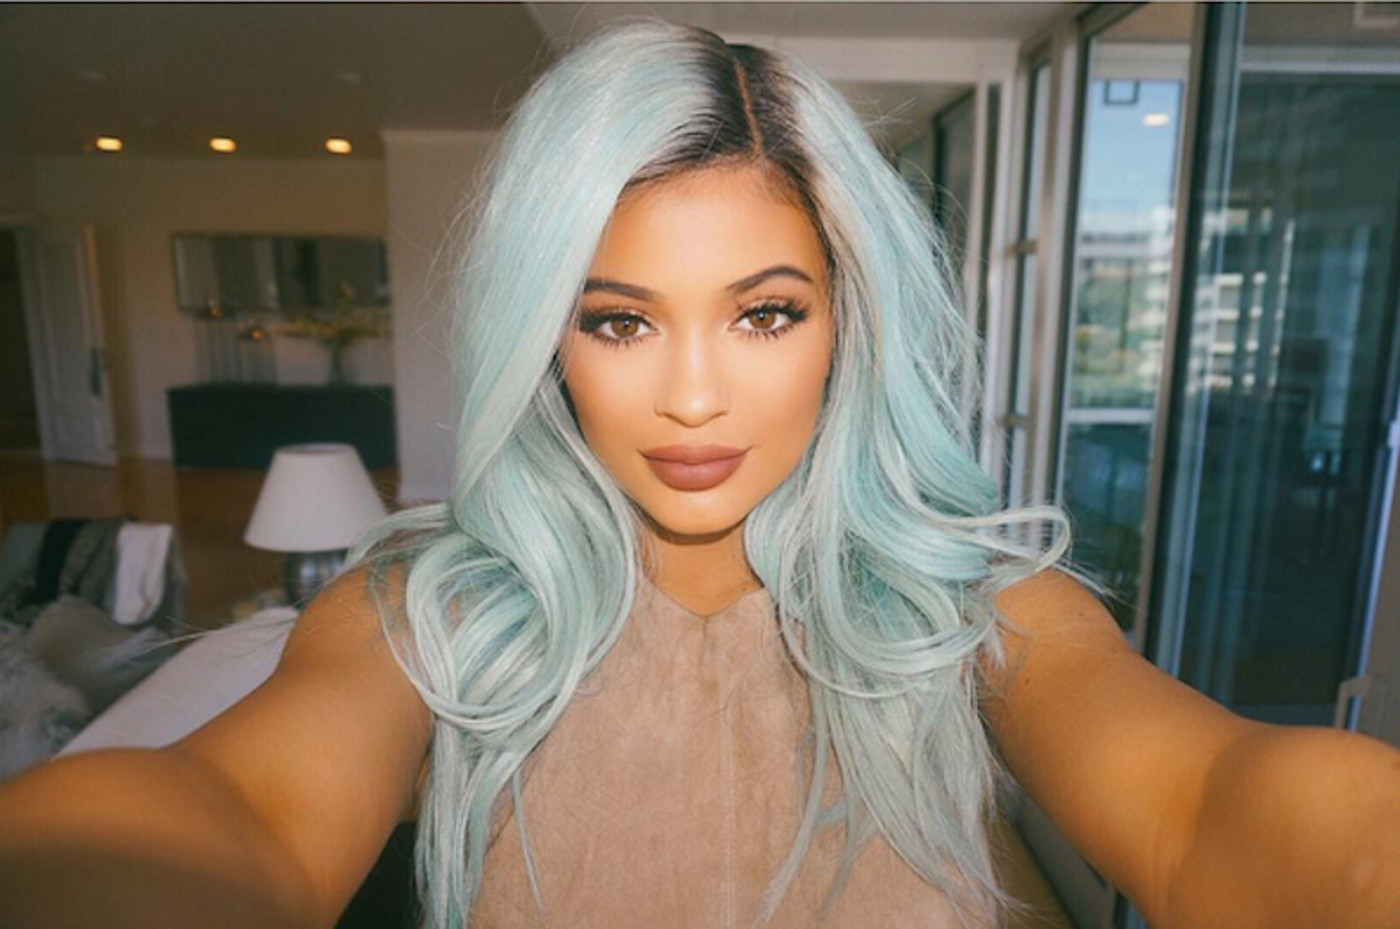 7. Blue wig inspiration from Kylie Jenner's Instagram - wide 8